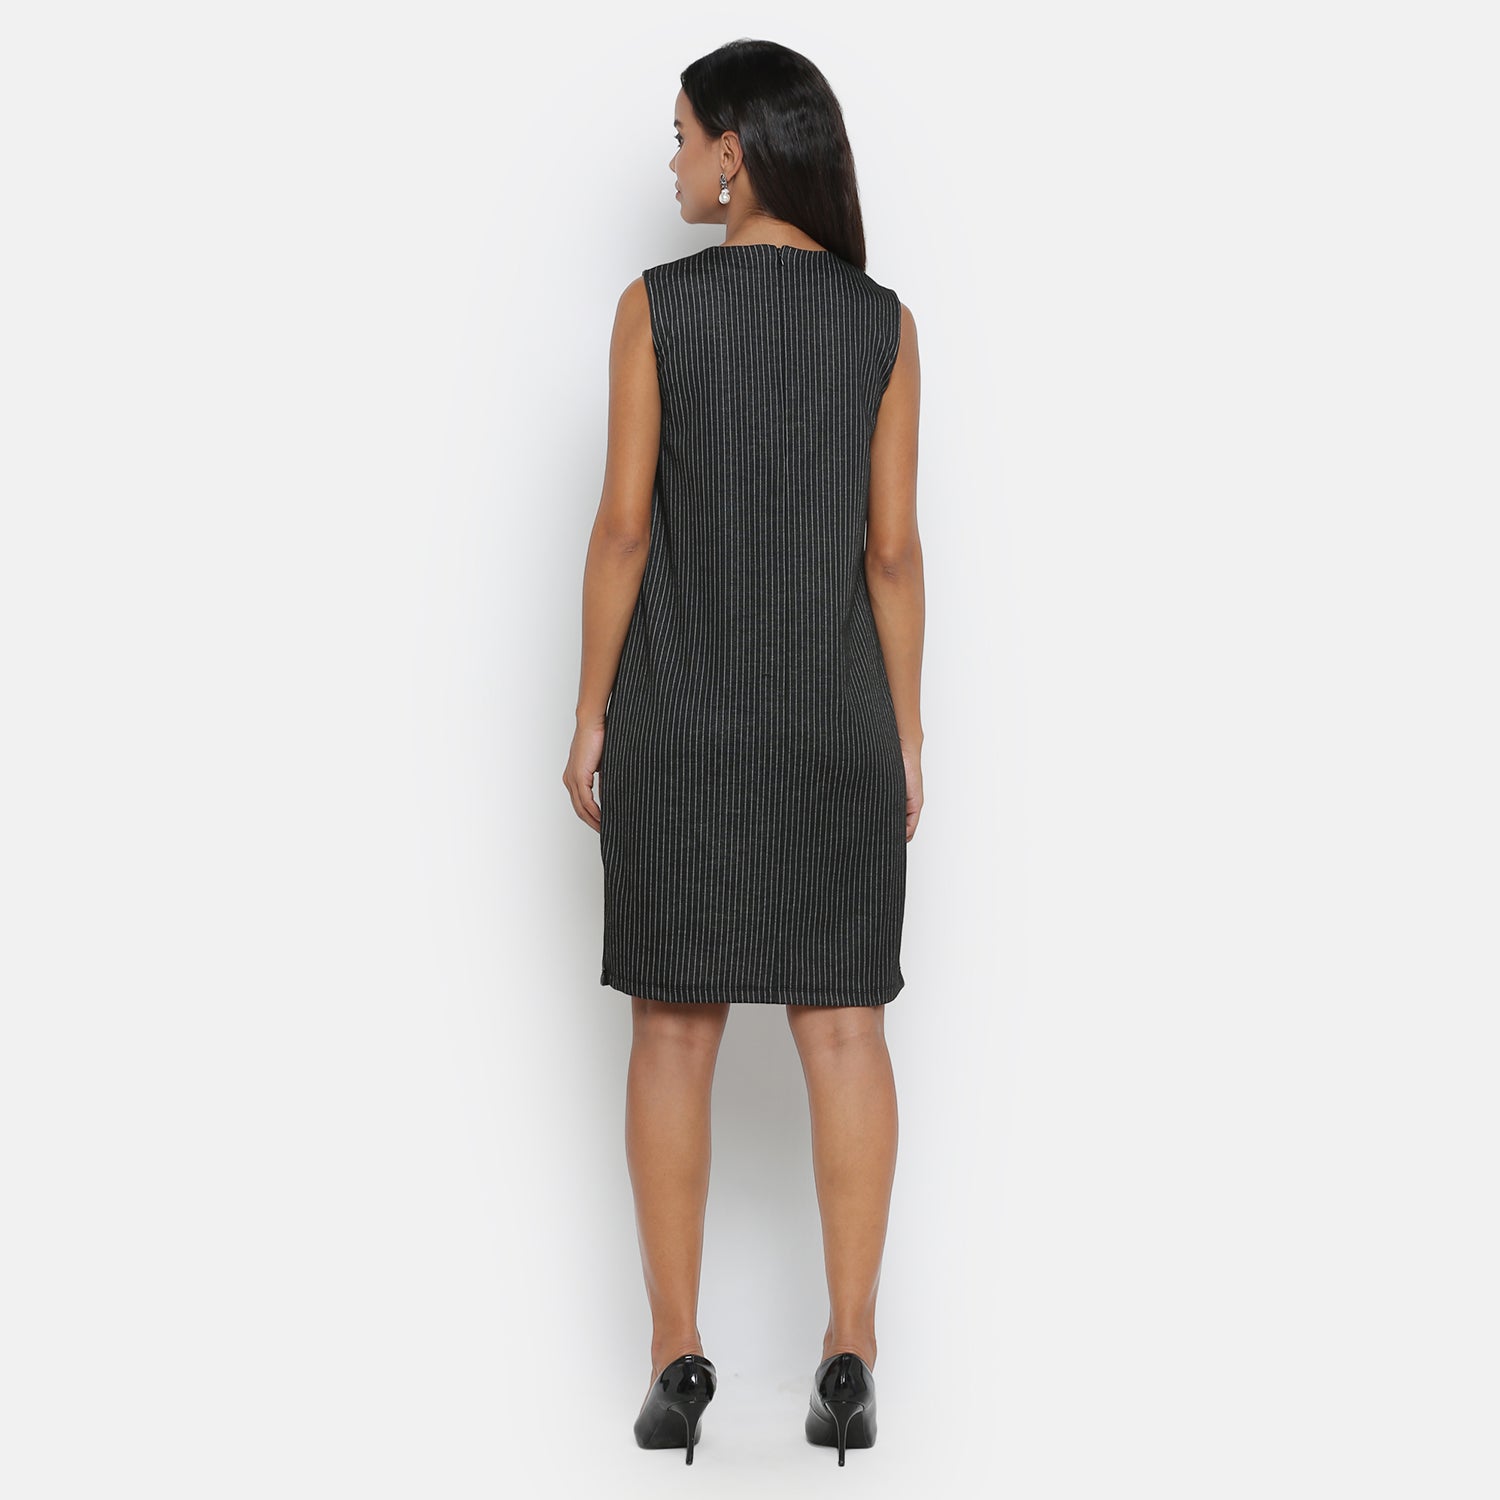 Black line sleeveless dress